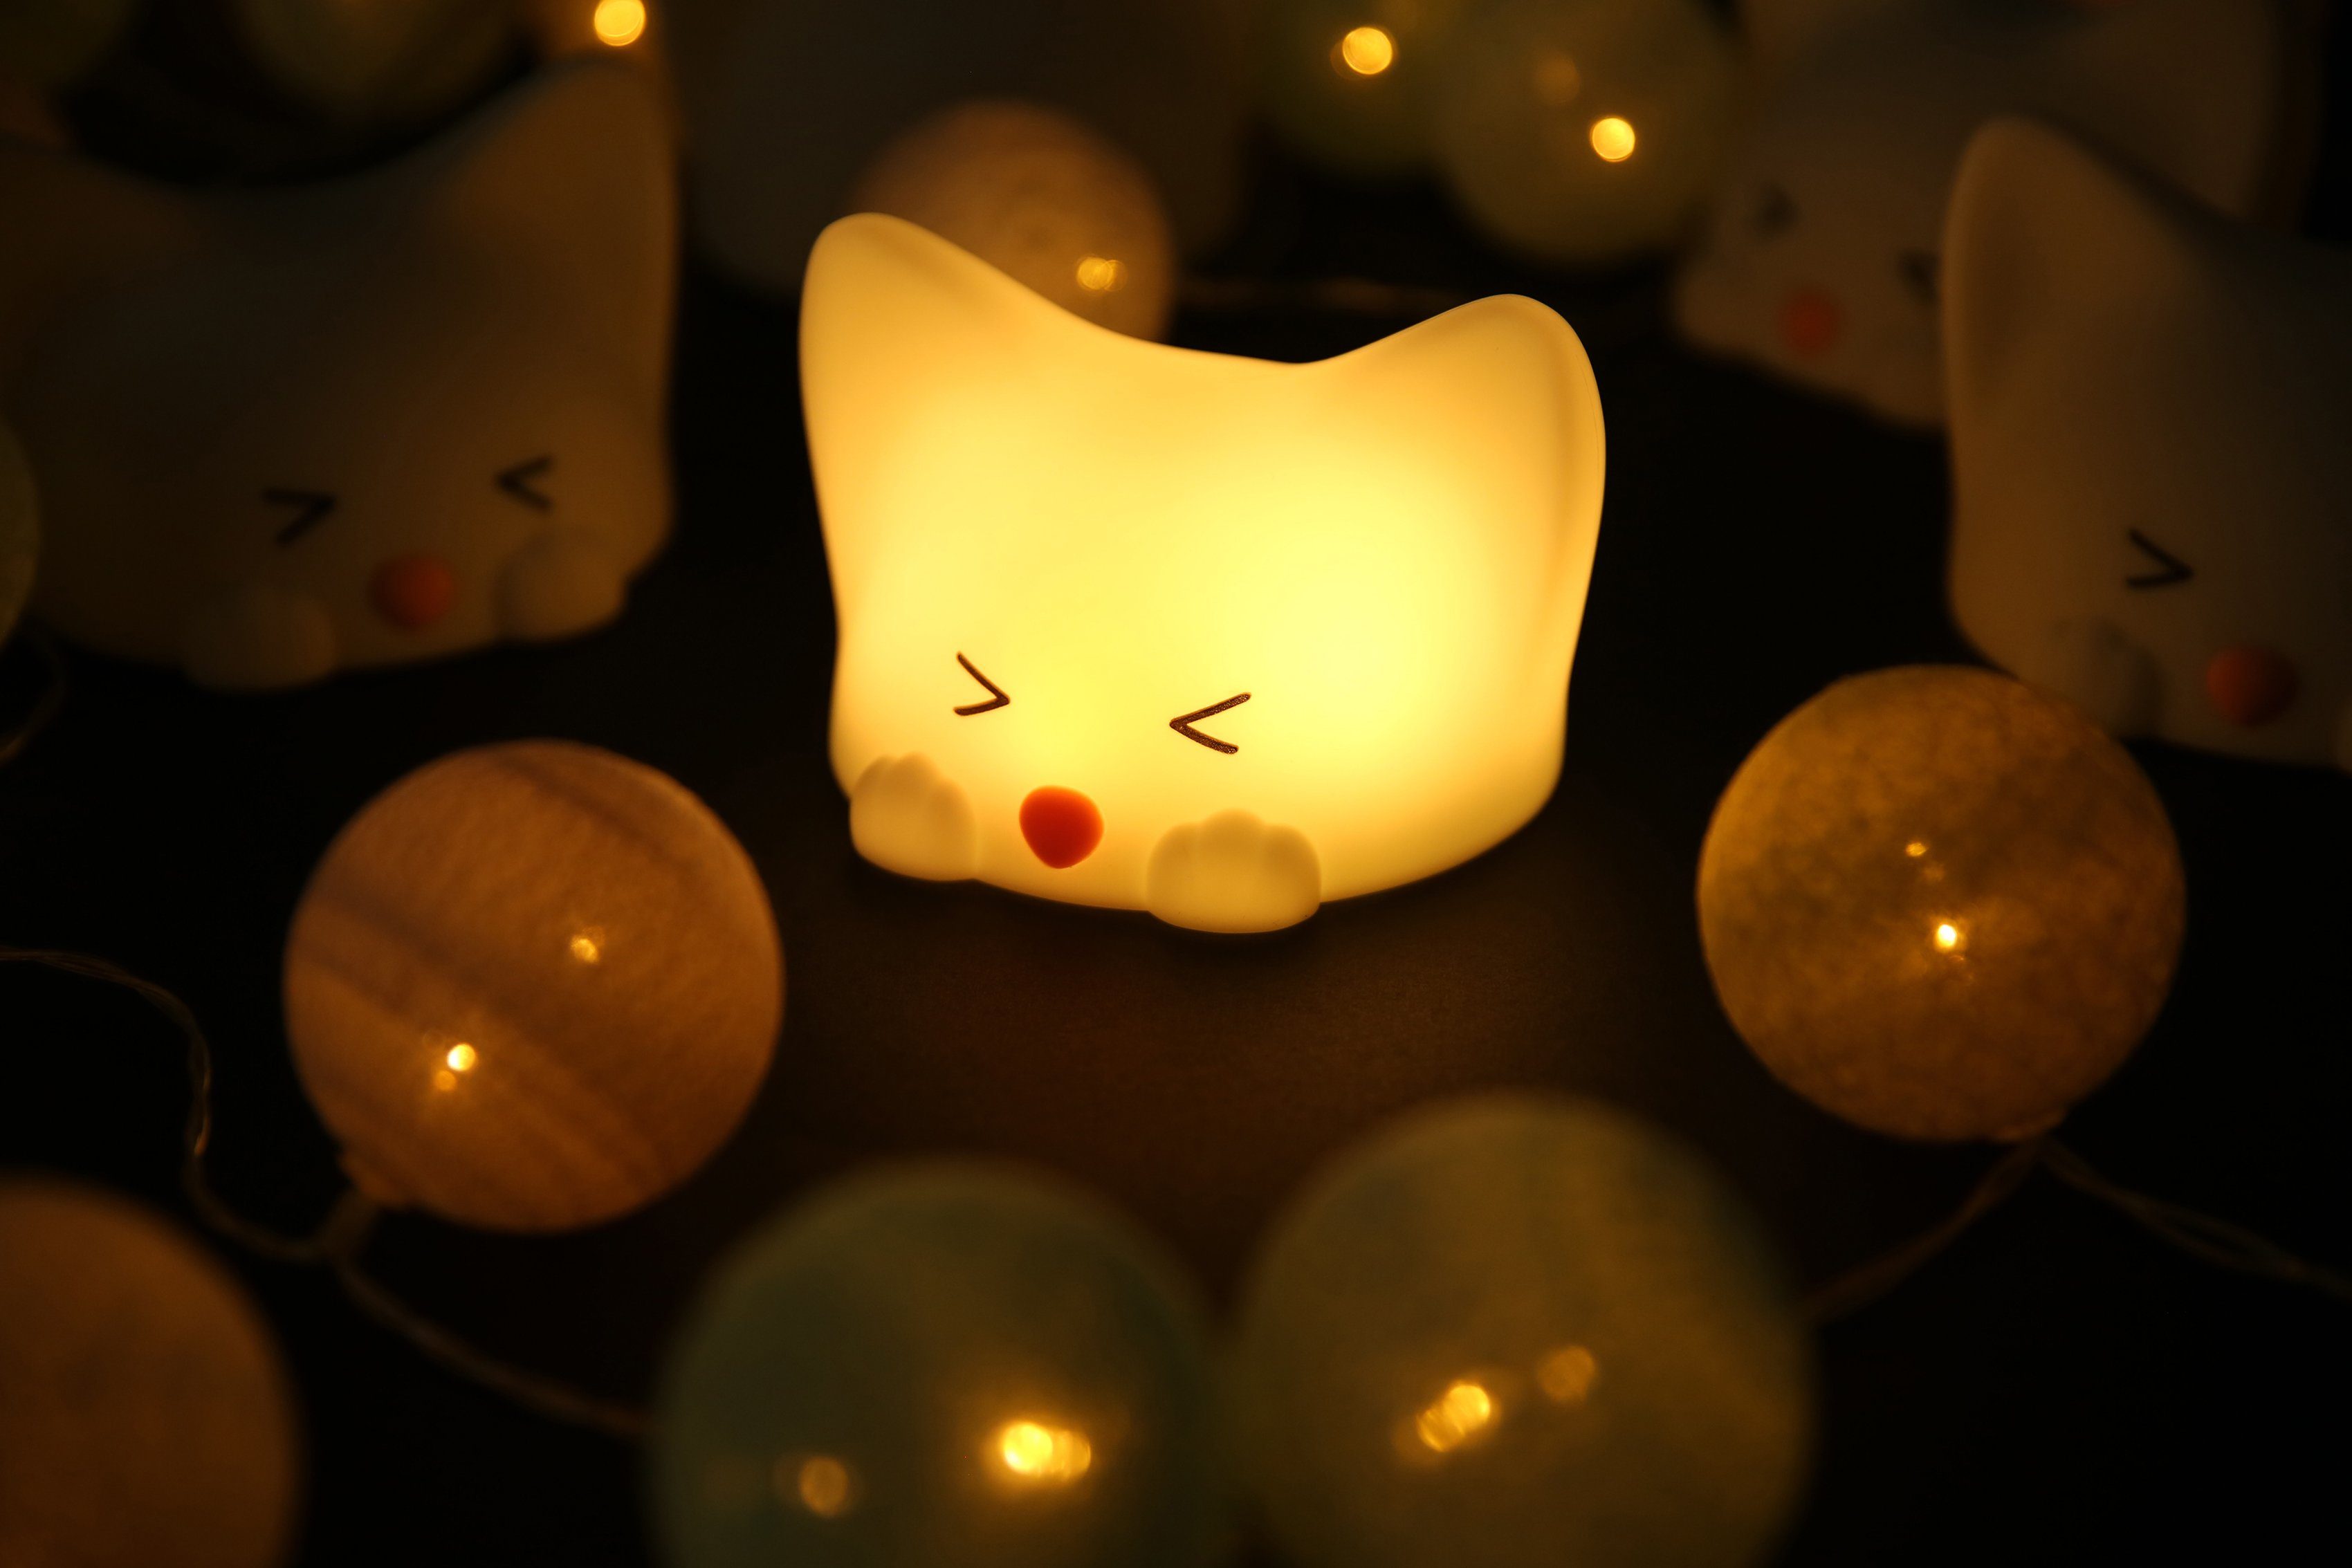 Catty niermann Cat Nachtlicht LED Cat, LED Nachtlicht fest integriert, Catty